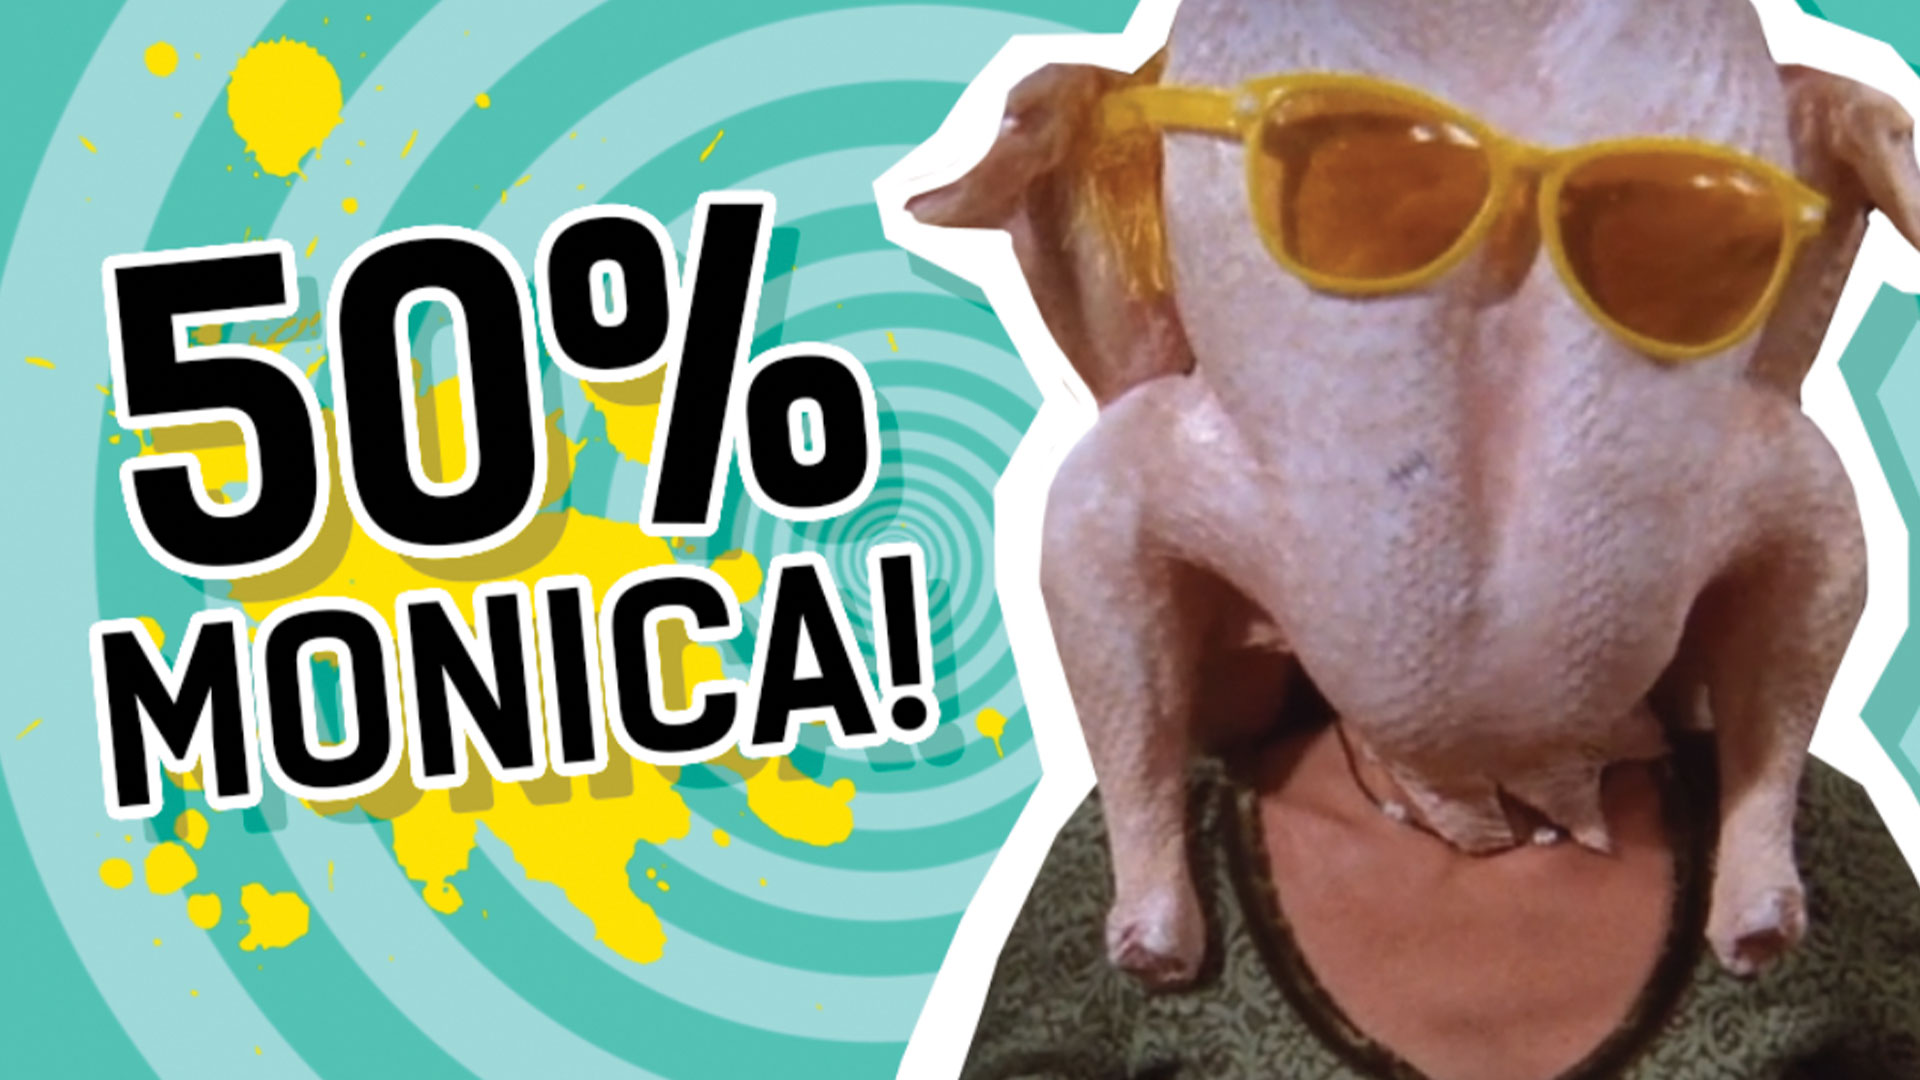 Result: 50% Monica